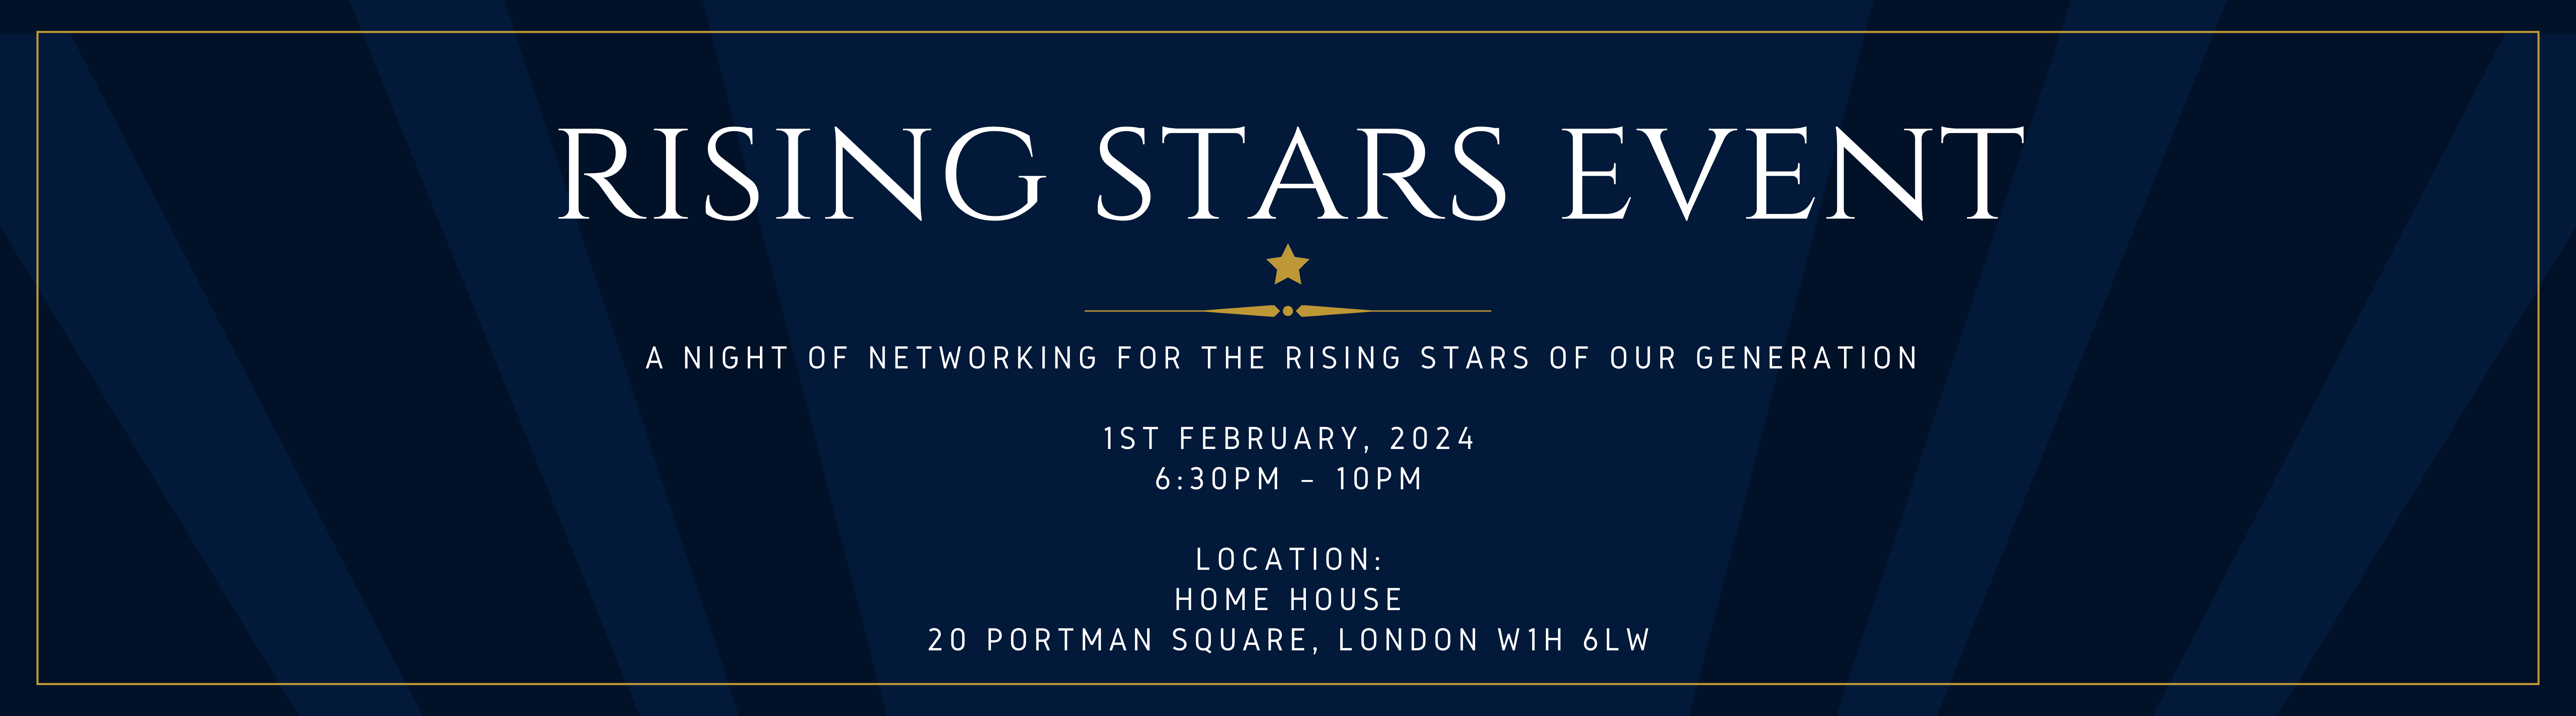 Rising stars event